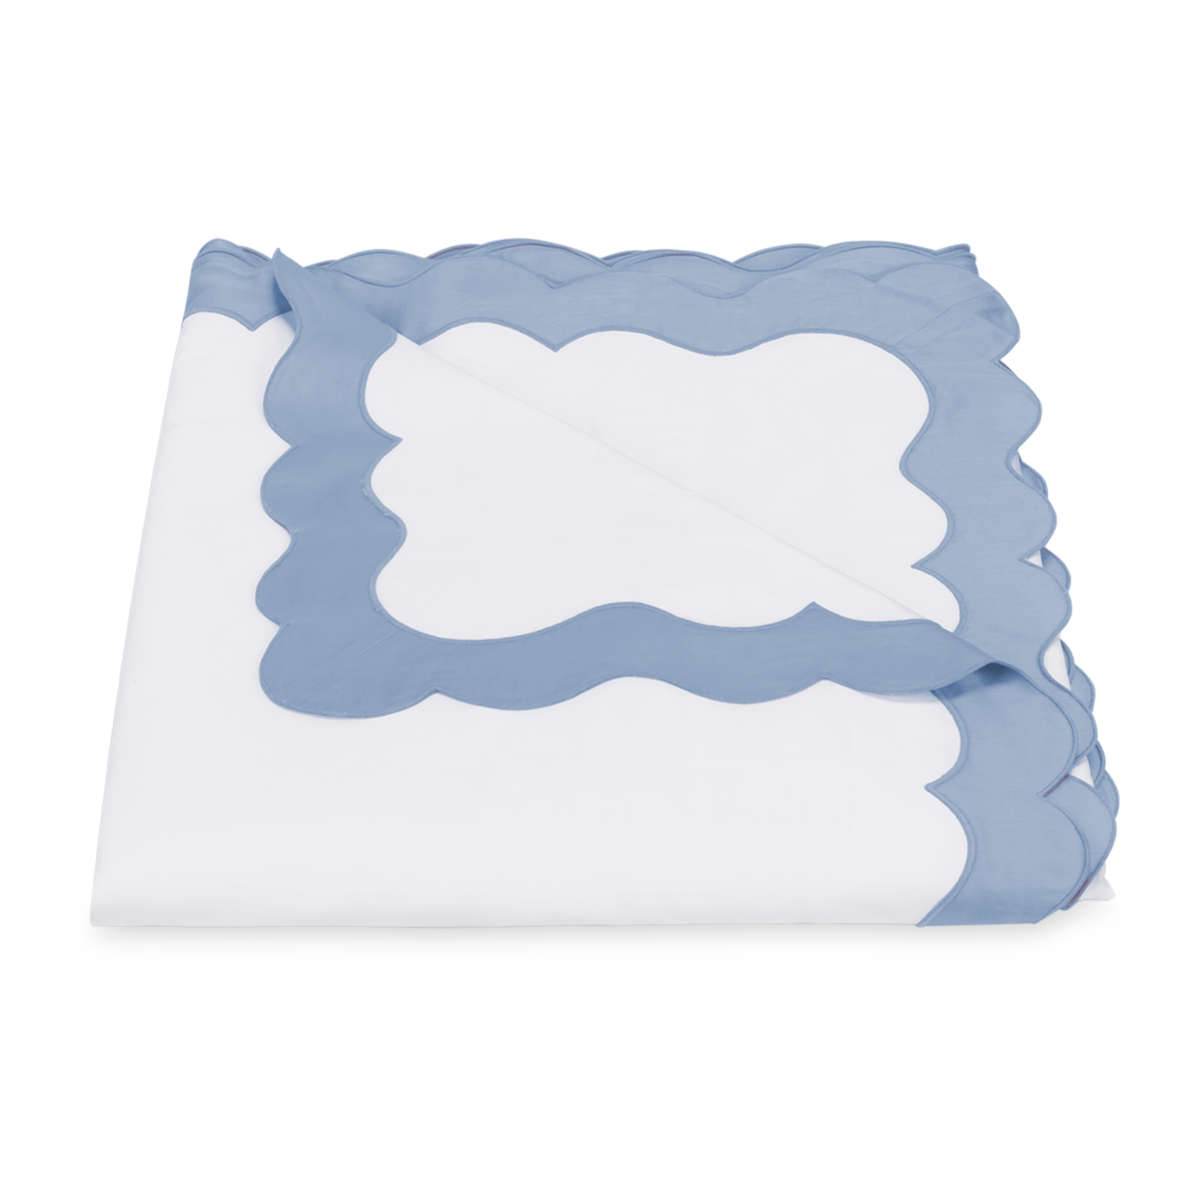 Folded Duvet Cover of Matouk Lorelei Bedding in Hazy Blue Color